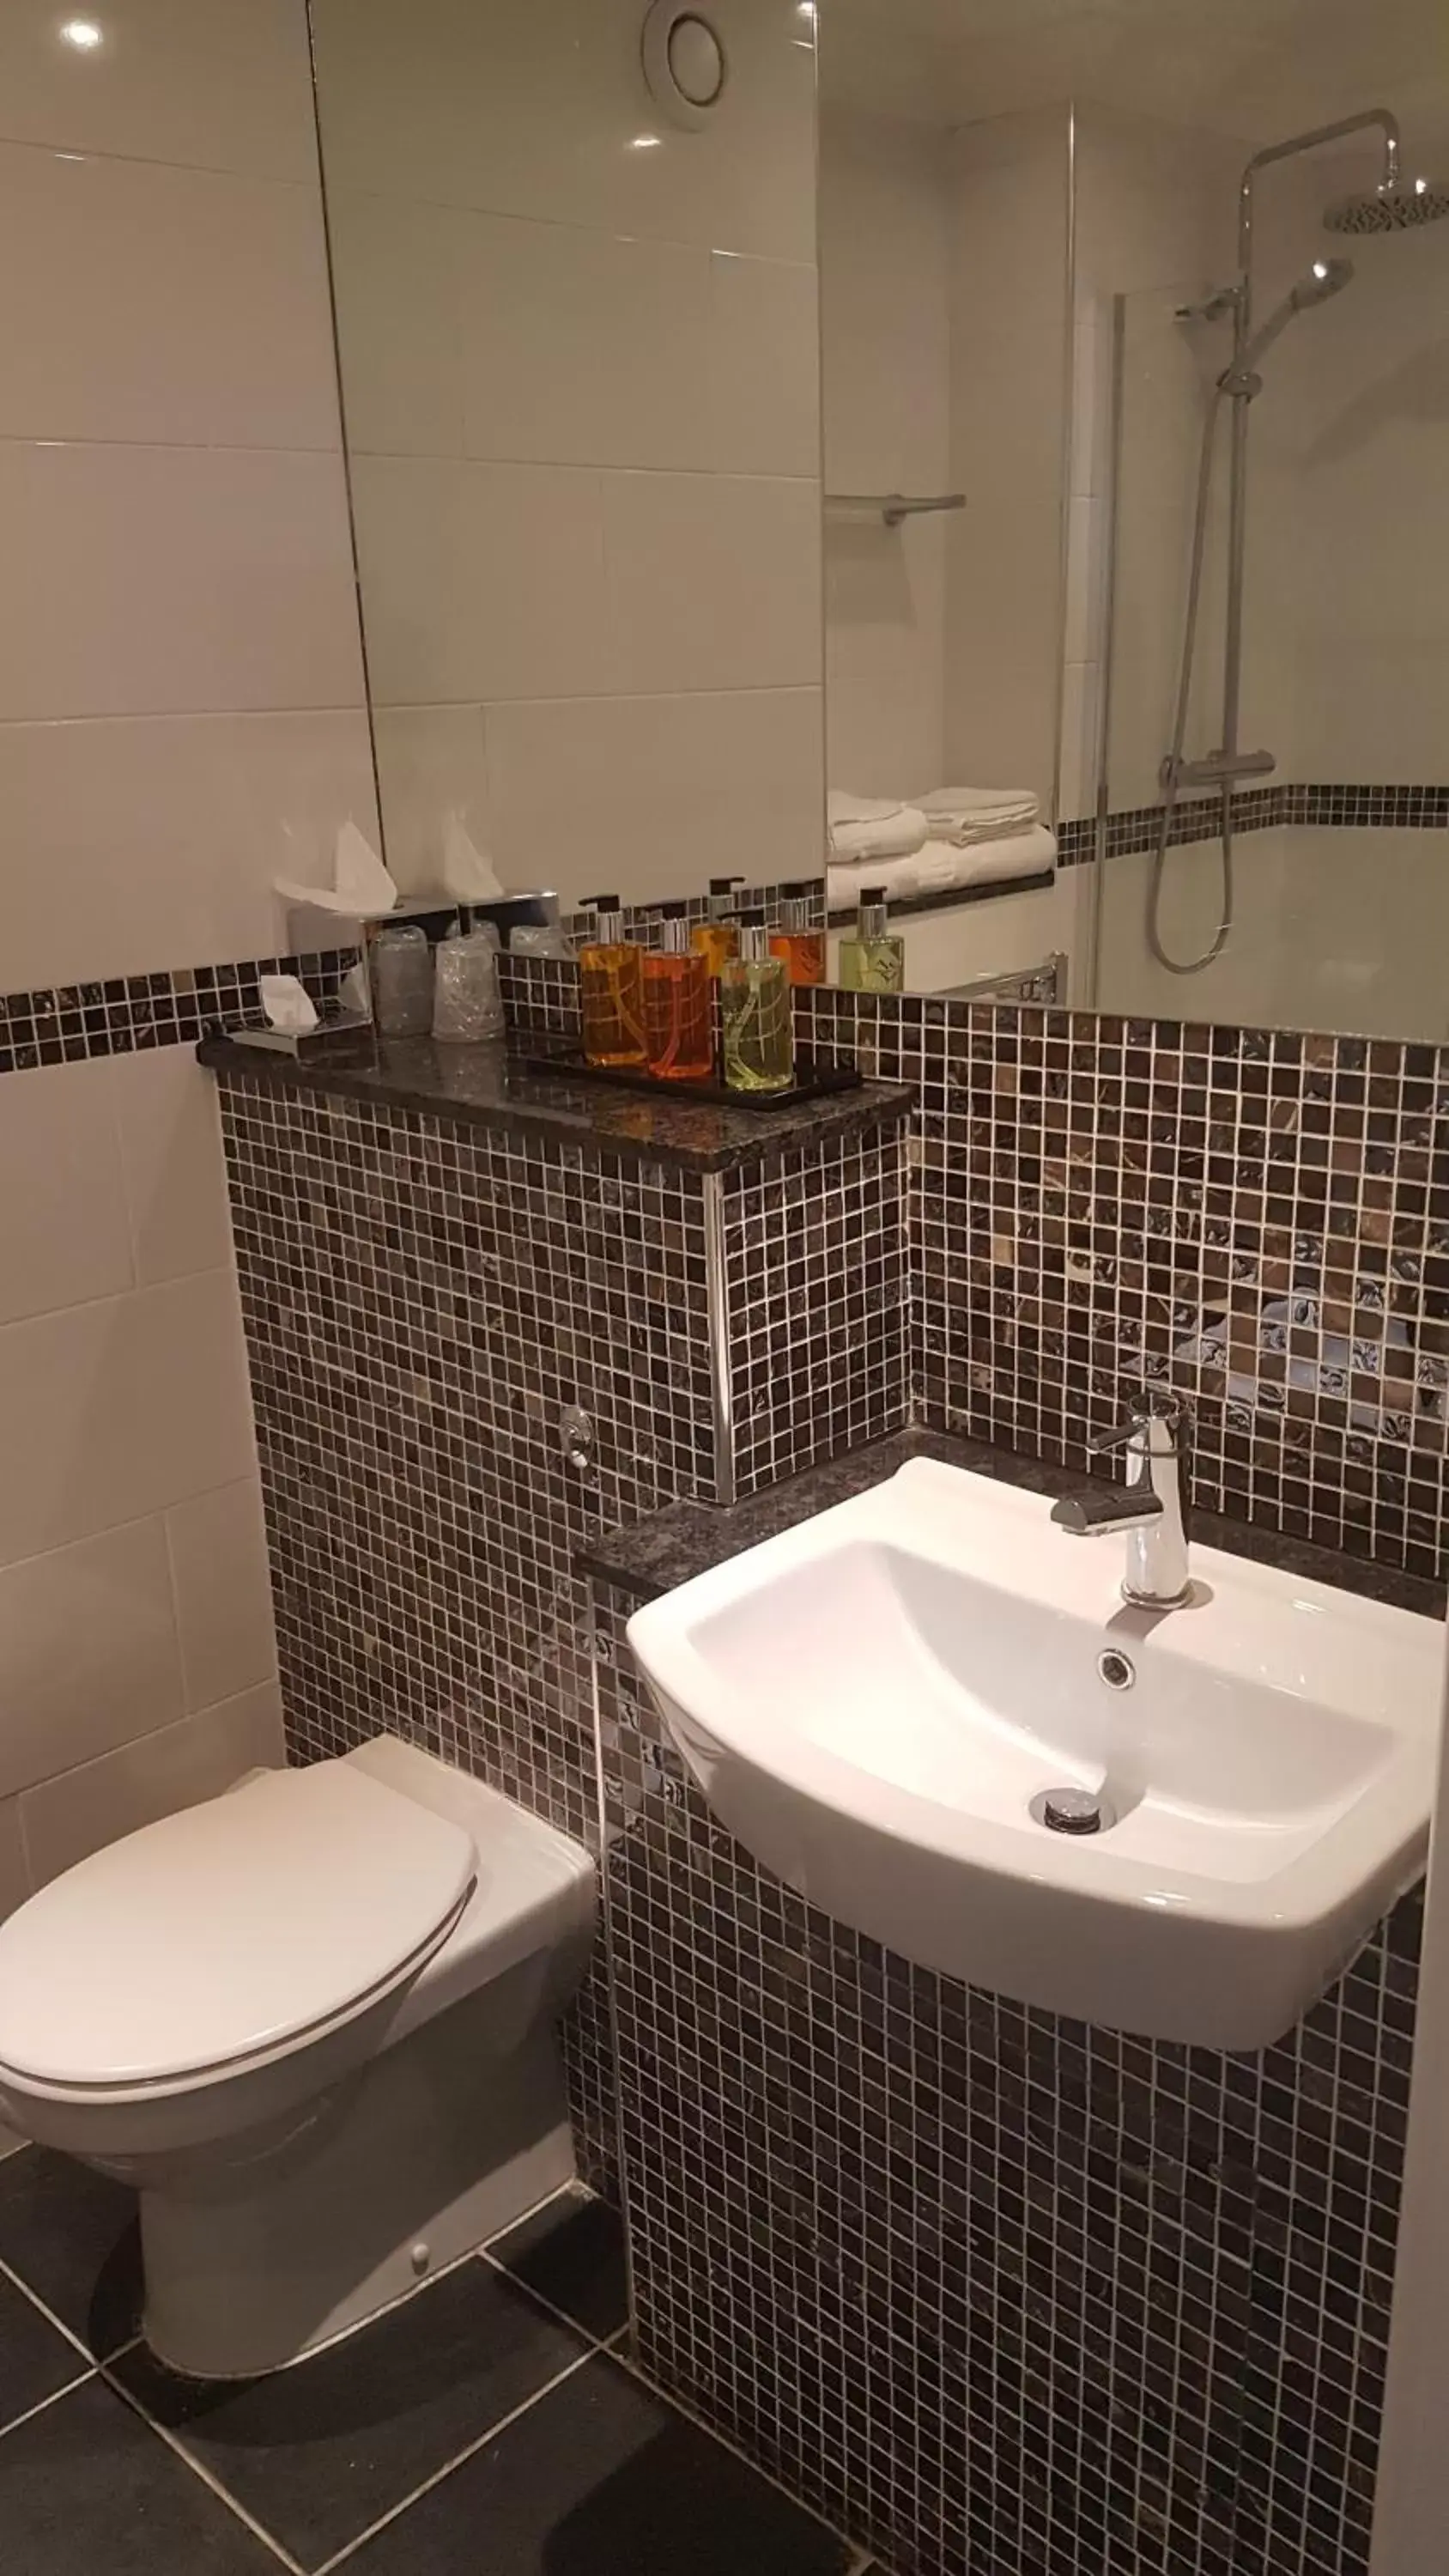 Bathroom in Stone House Hotel ‘A Bespoke Hotel’